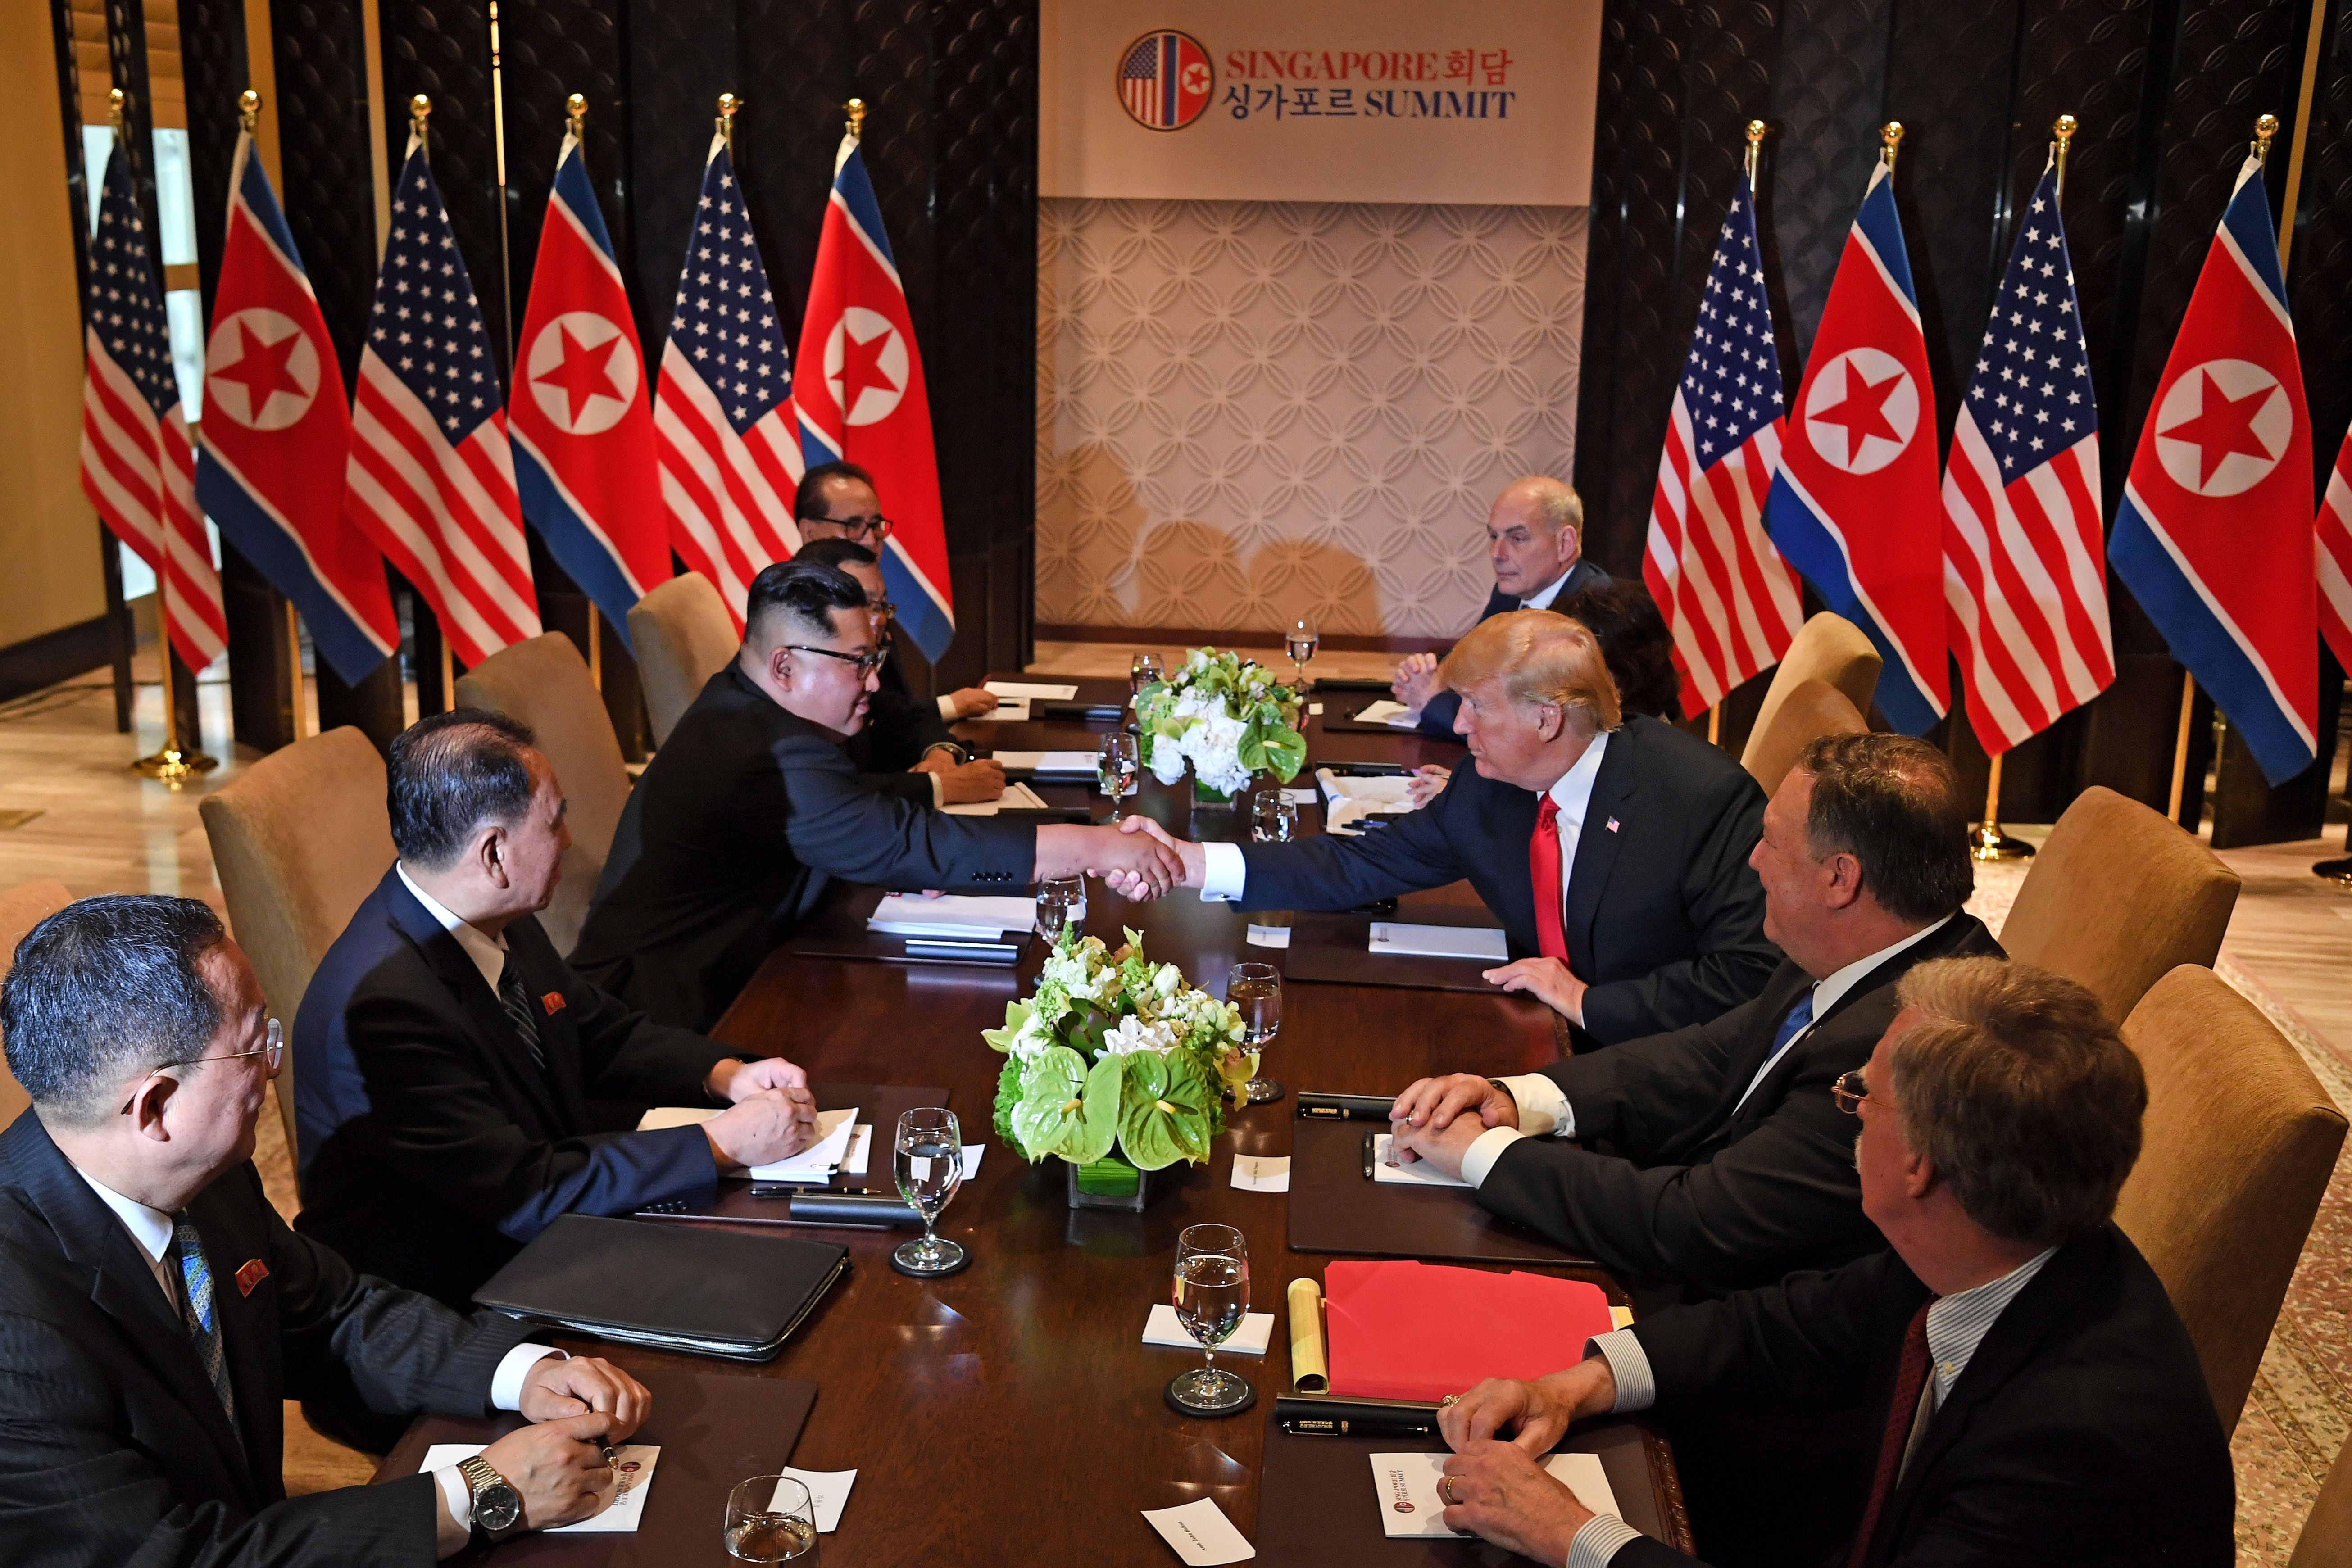 Trump and Kim shake hands across a long rectangular table